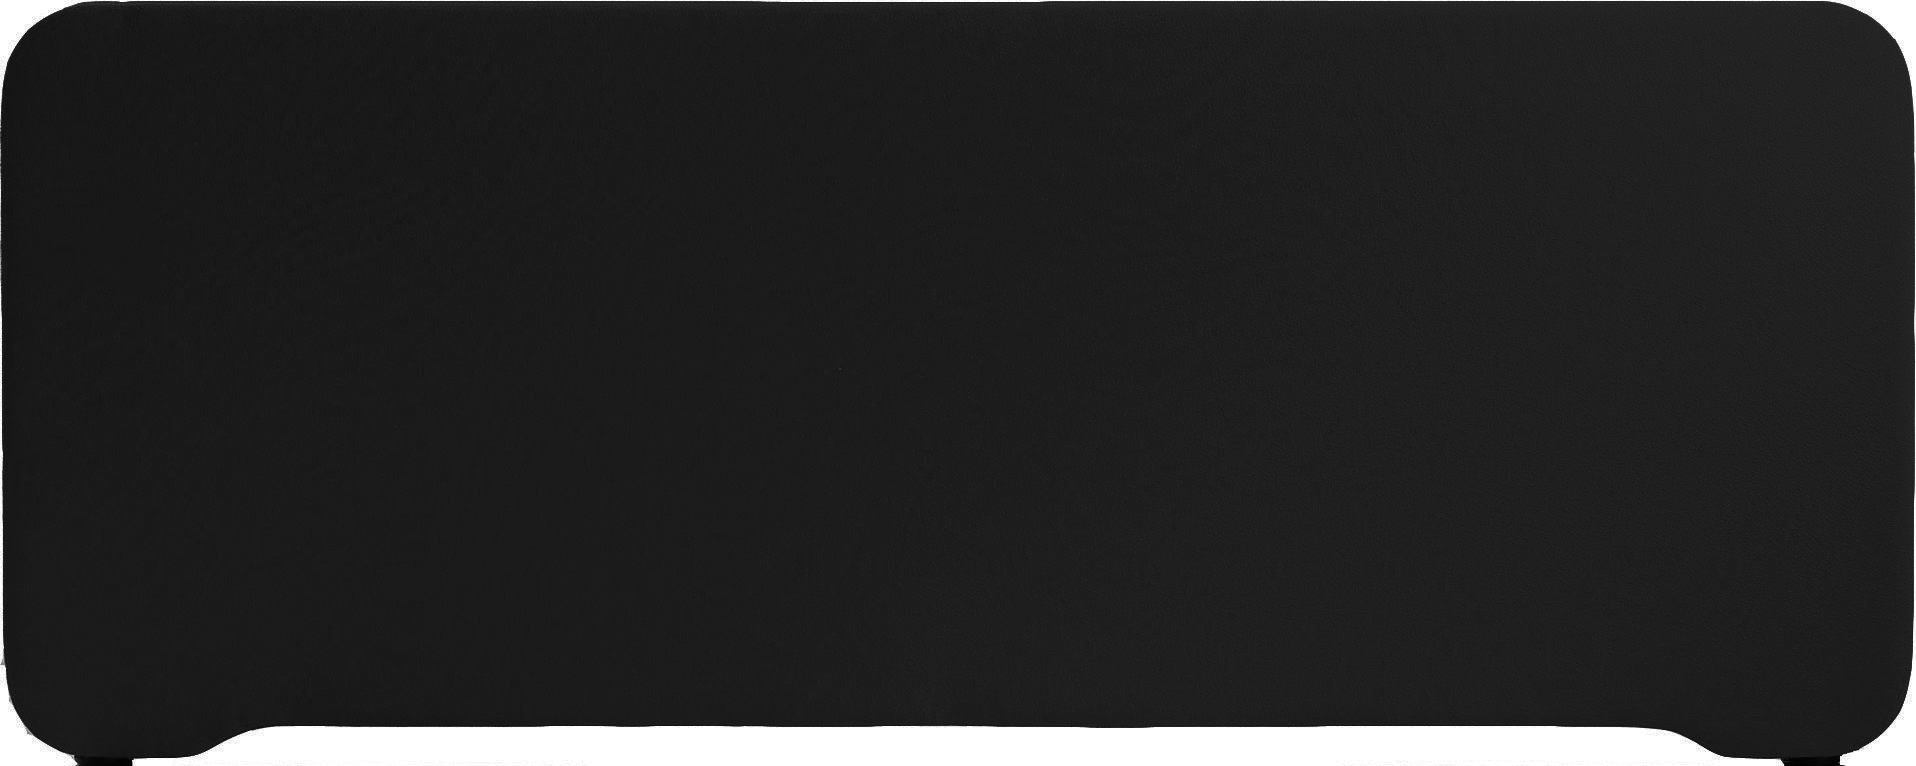 [2484092] Bordsskärm Edge 1000x400mm svart